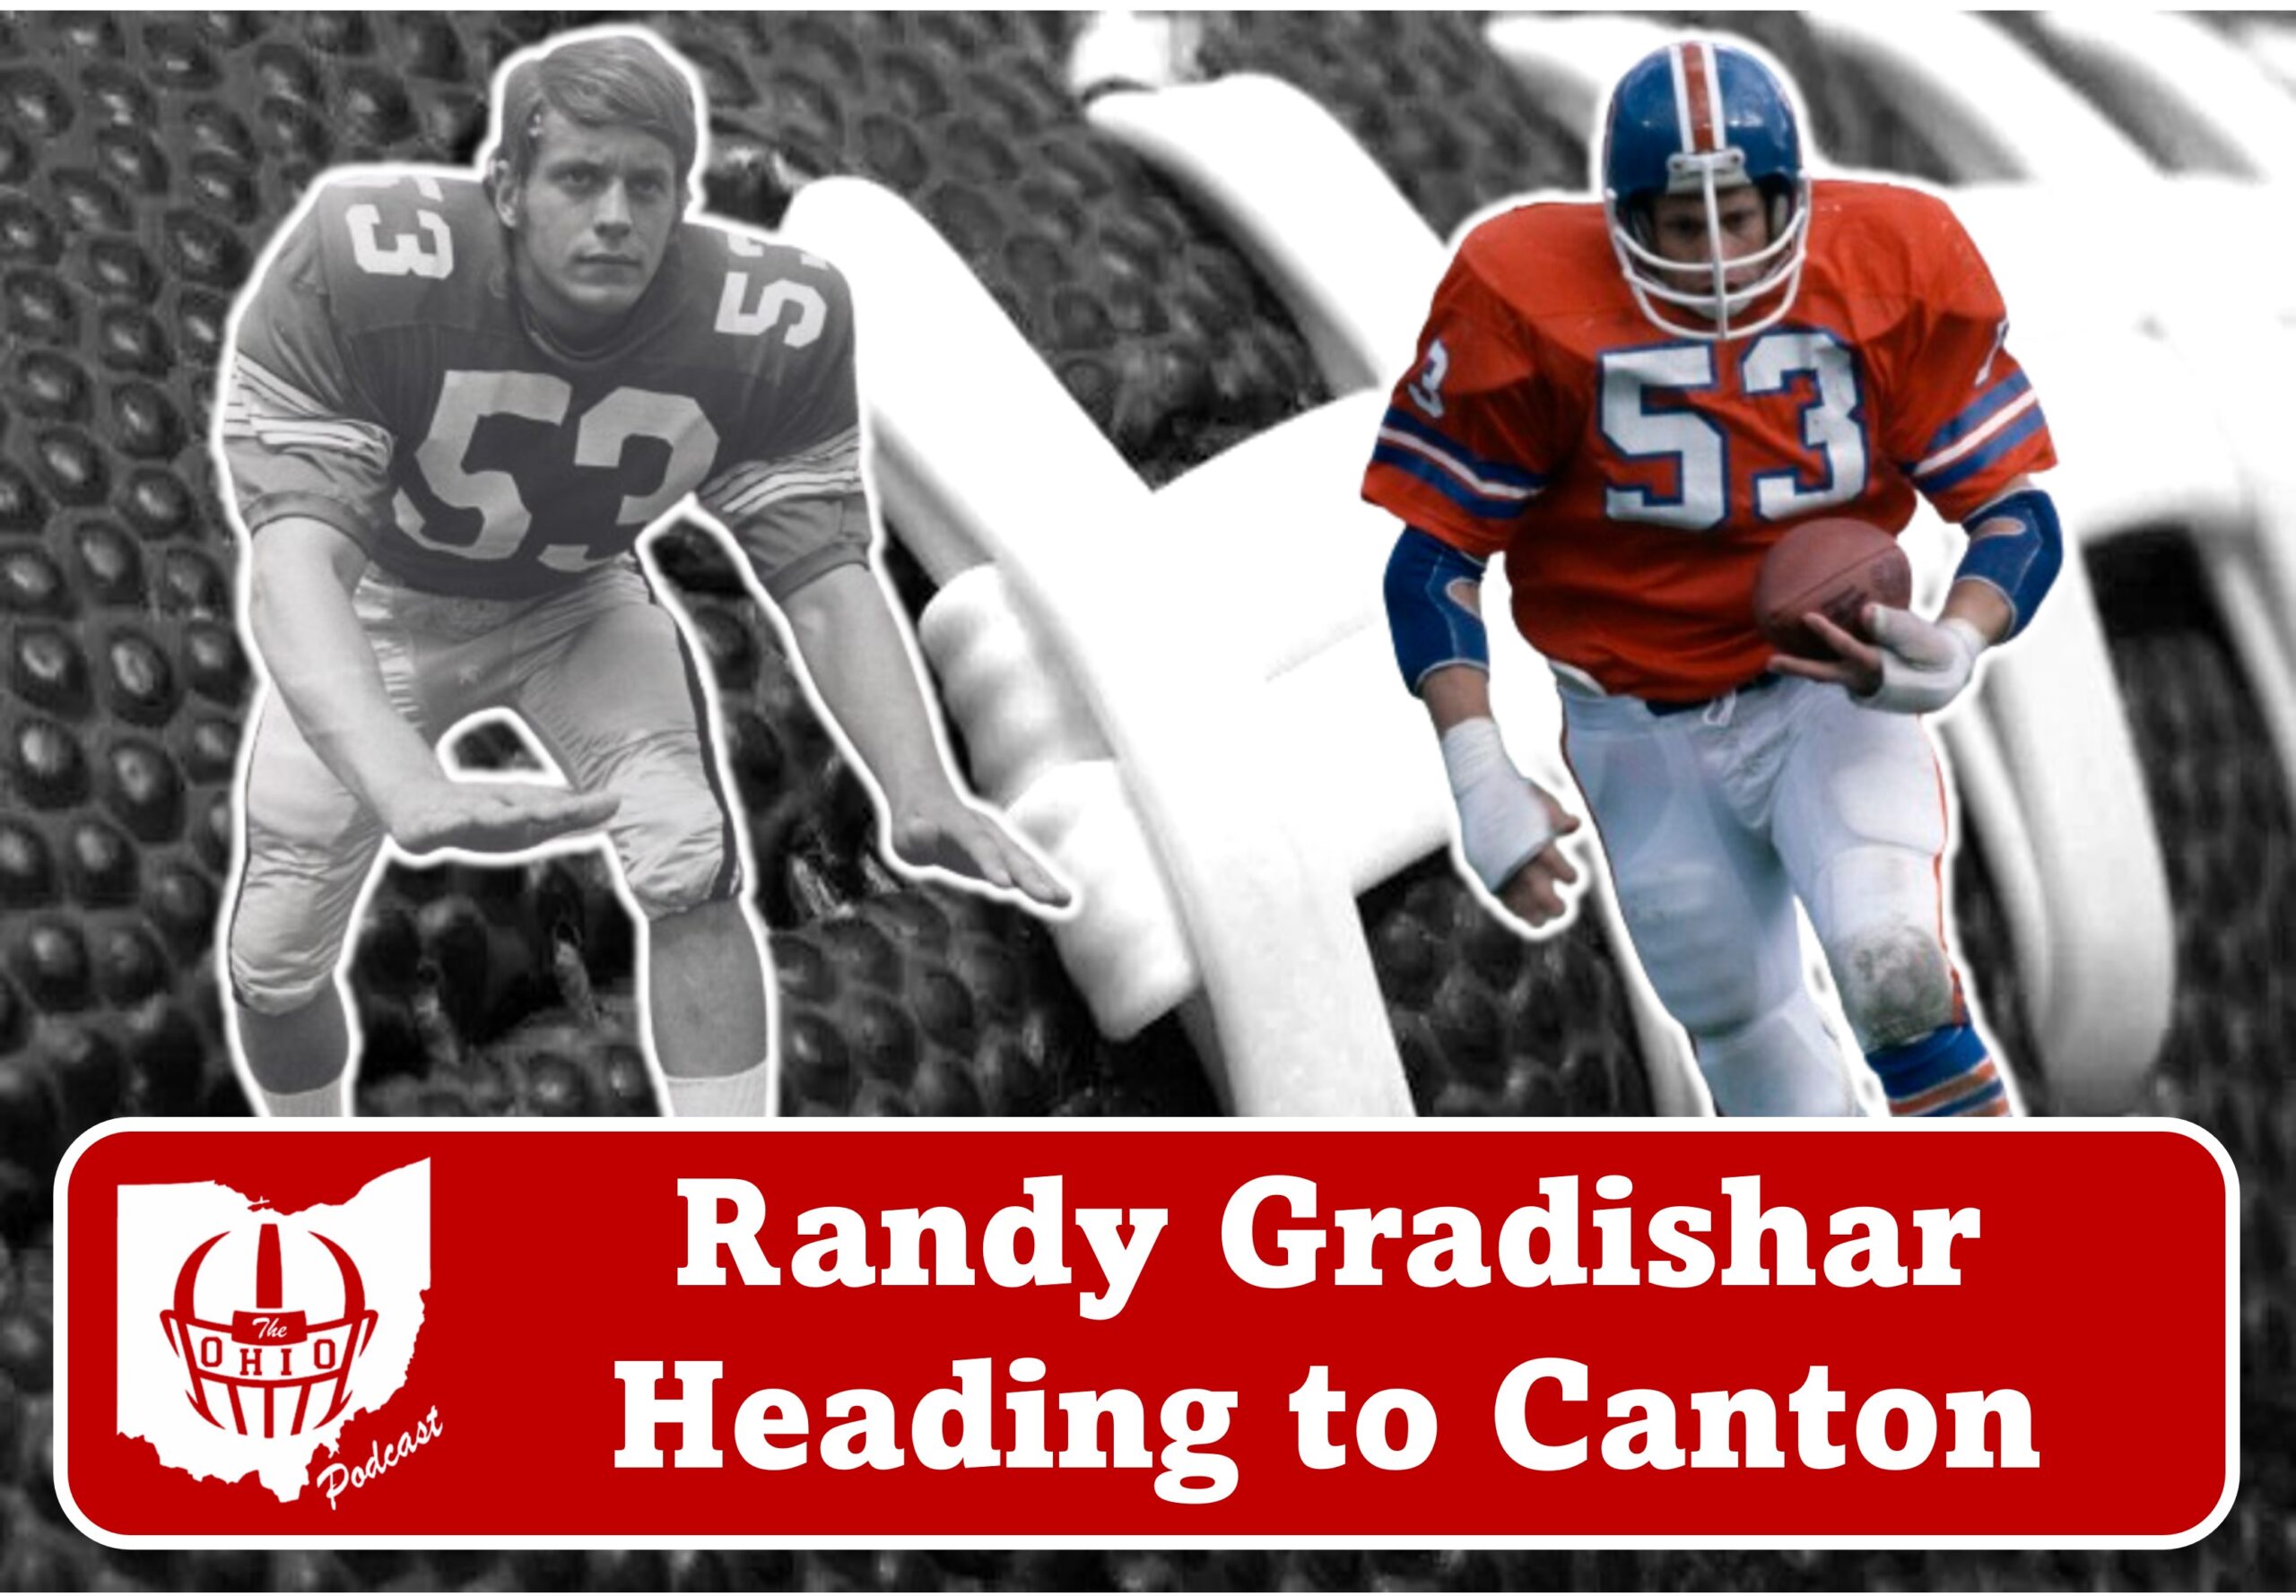 Former Buckeye, Randy Gradishar, to be enshrined in Canton